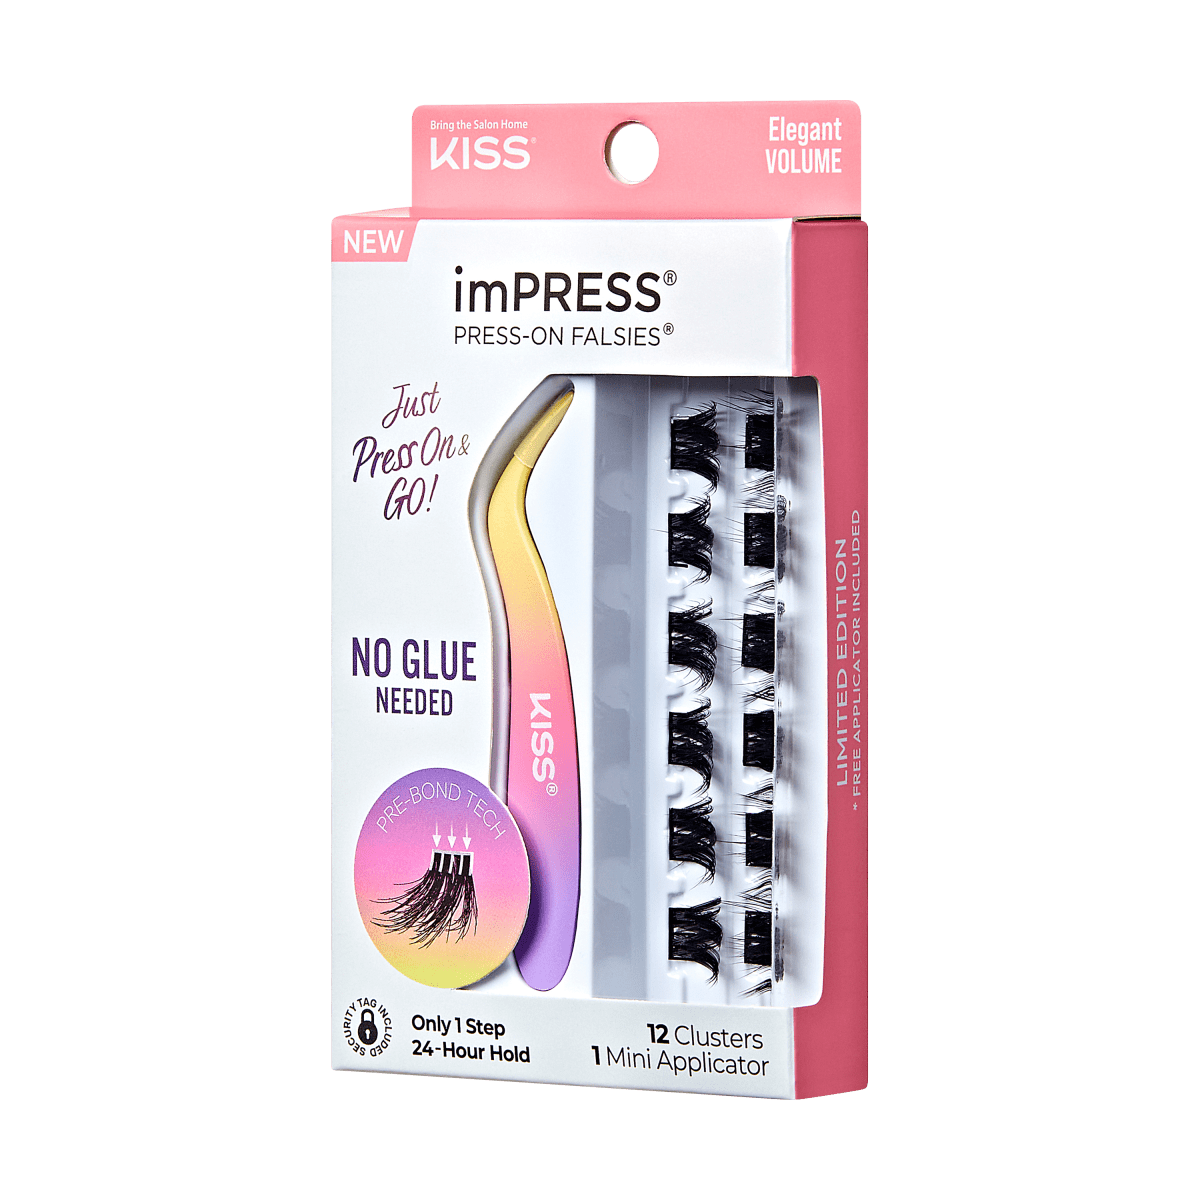 imPRESS Press-On Falsies Minipack, 12 Clusters + Applicator - Elegant